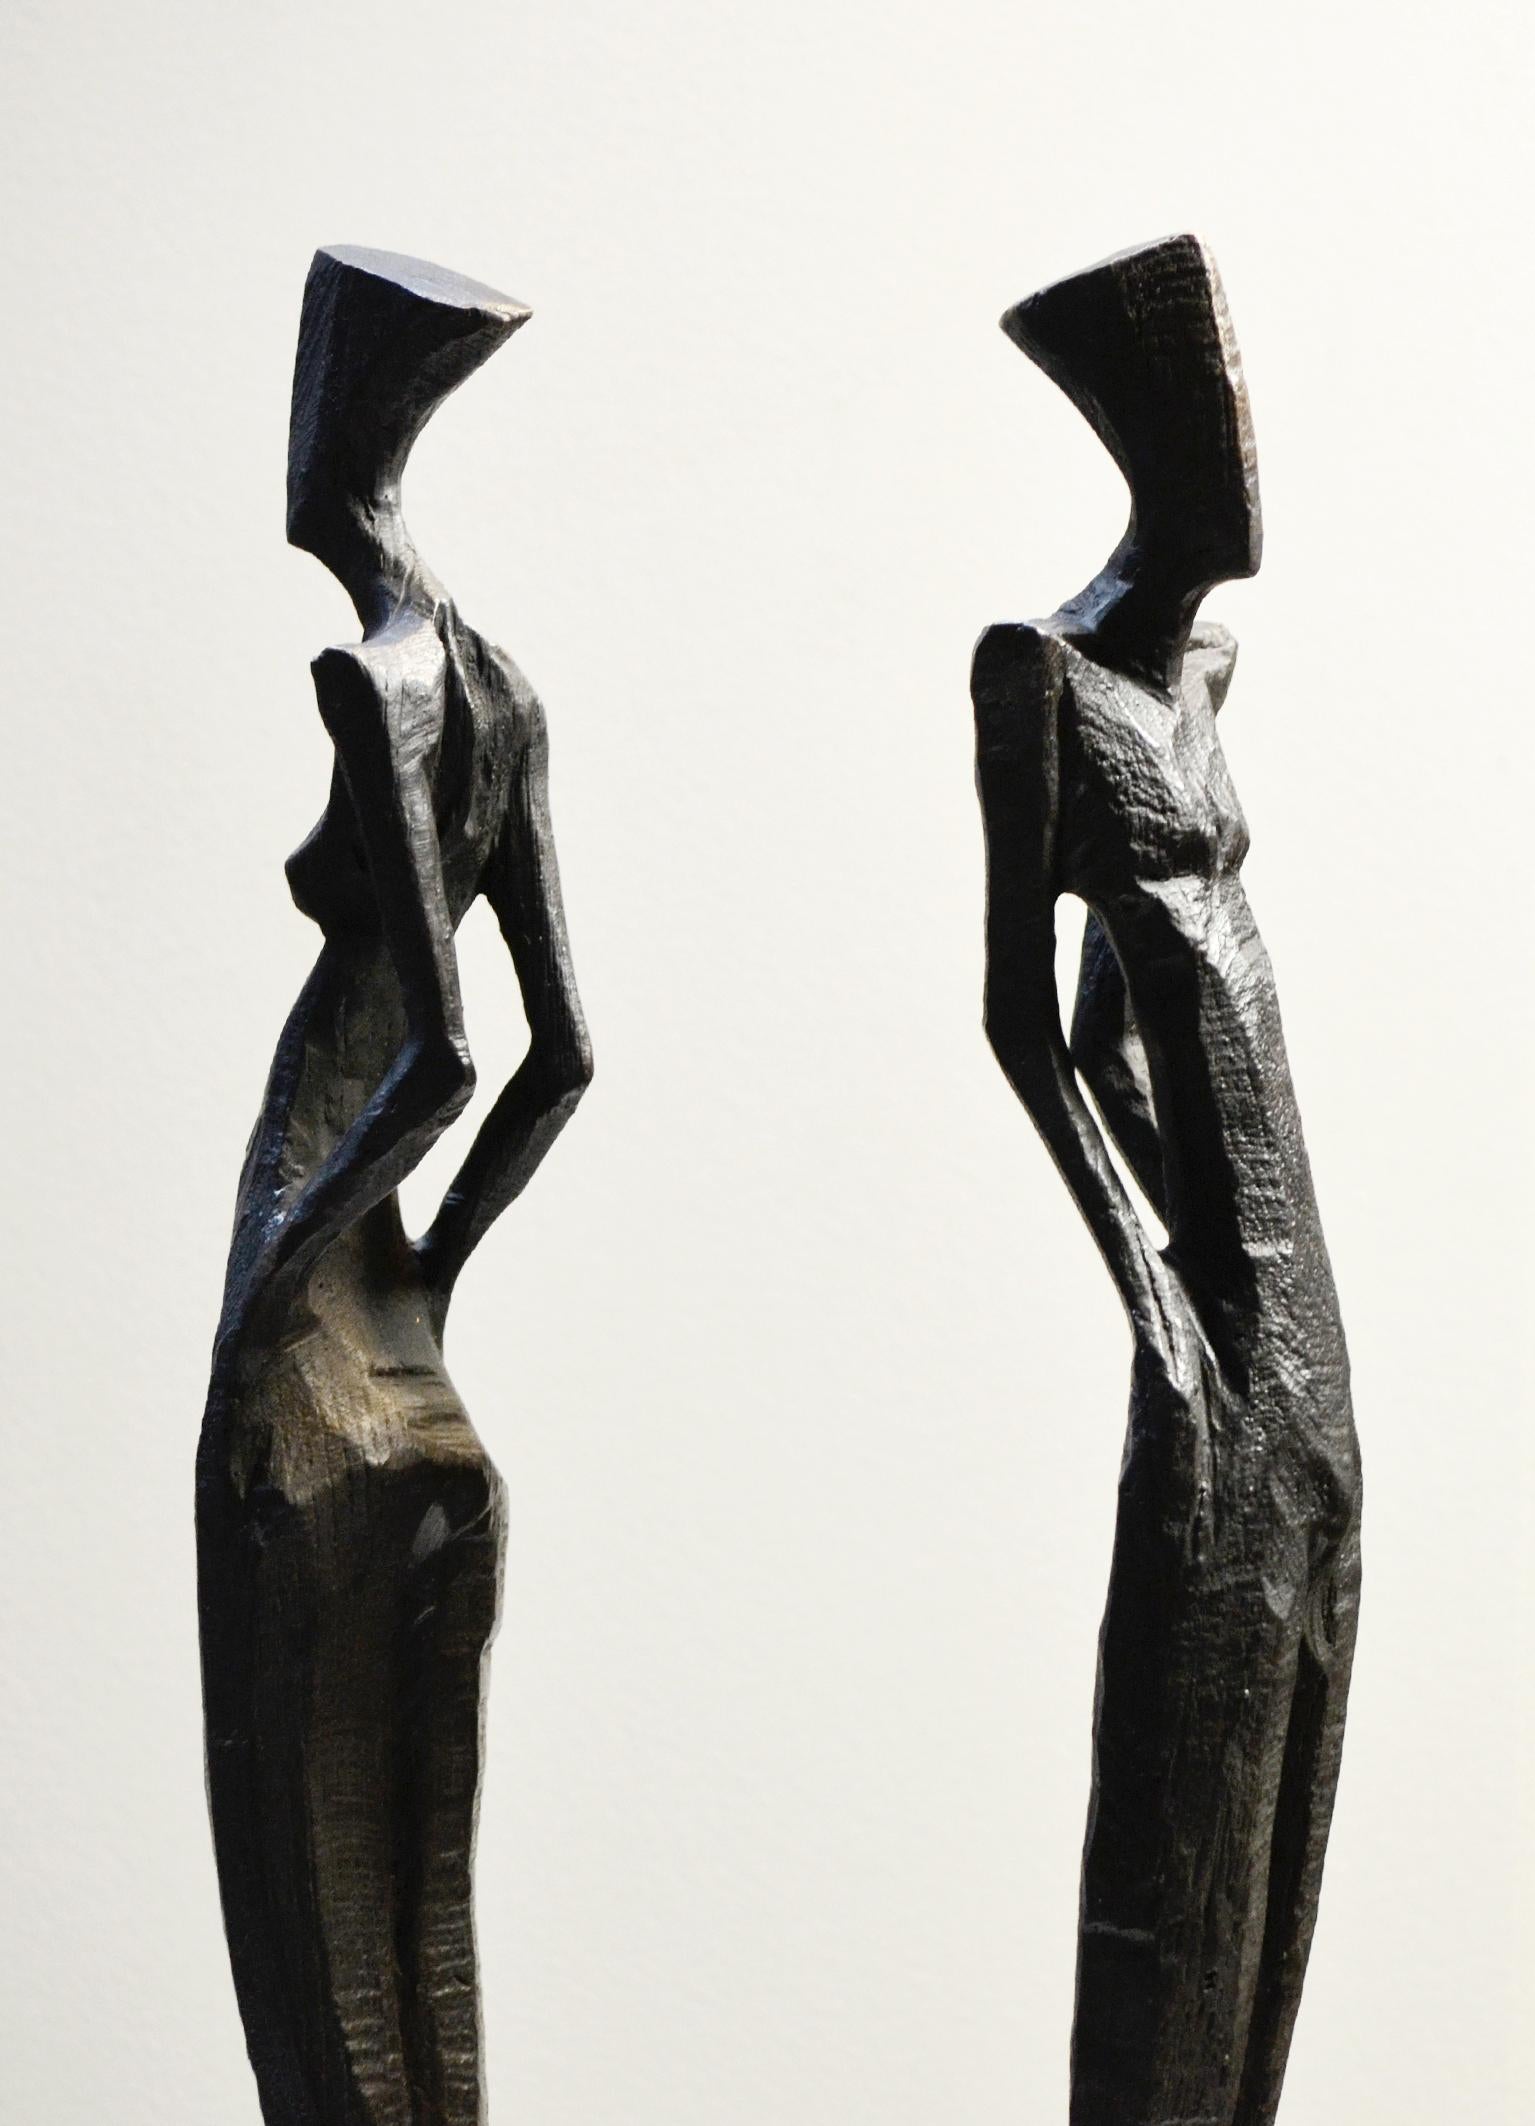 Patricia III by Nando Kallweit. Tall, elegant bronze sculpture of human figure. 2